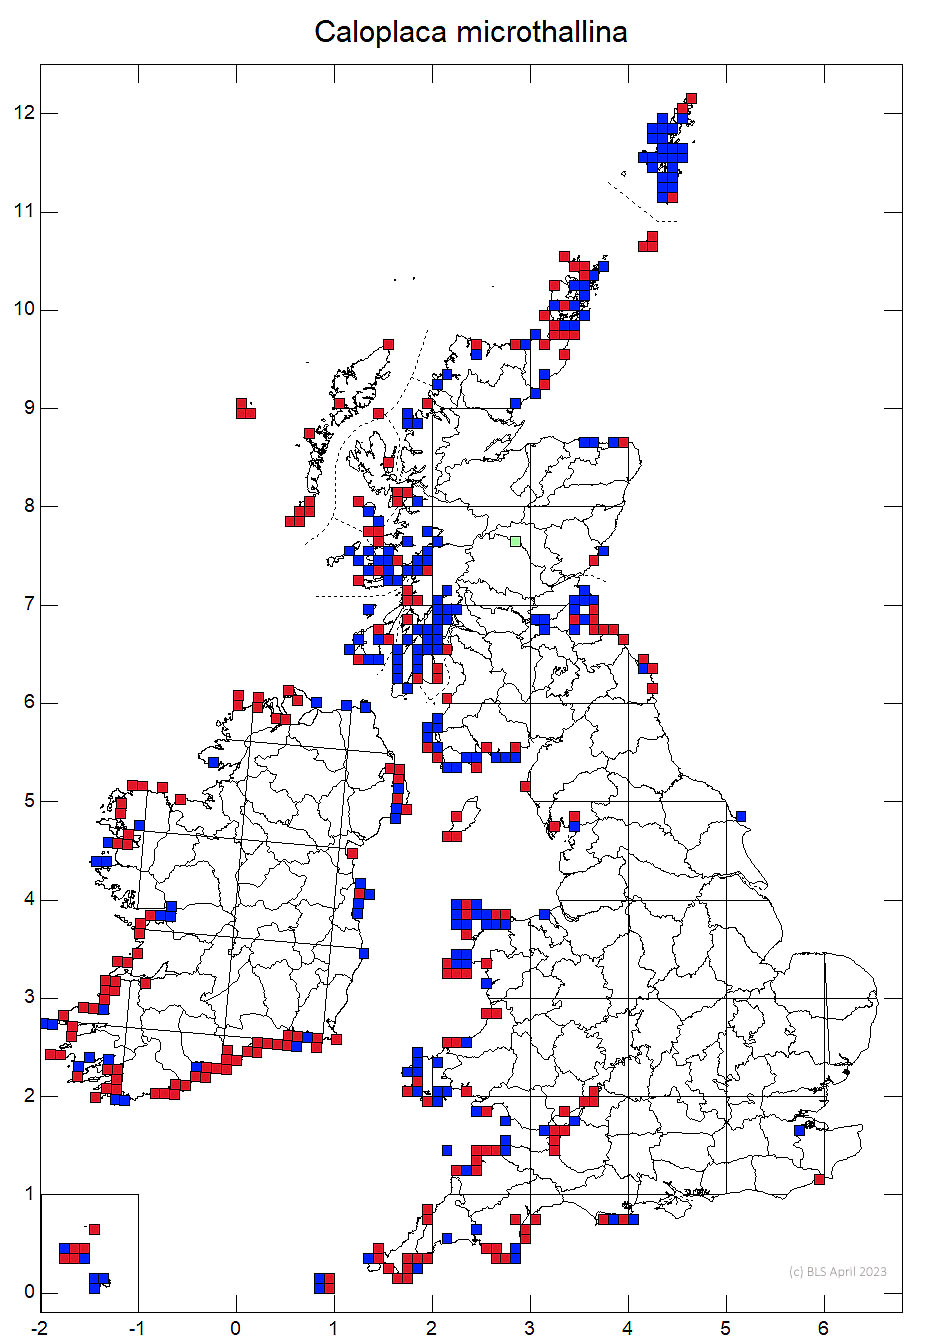 Caloplaca microthallina 10km sq distribution map